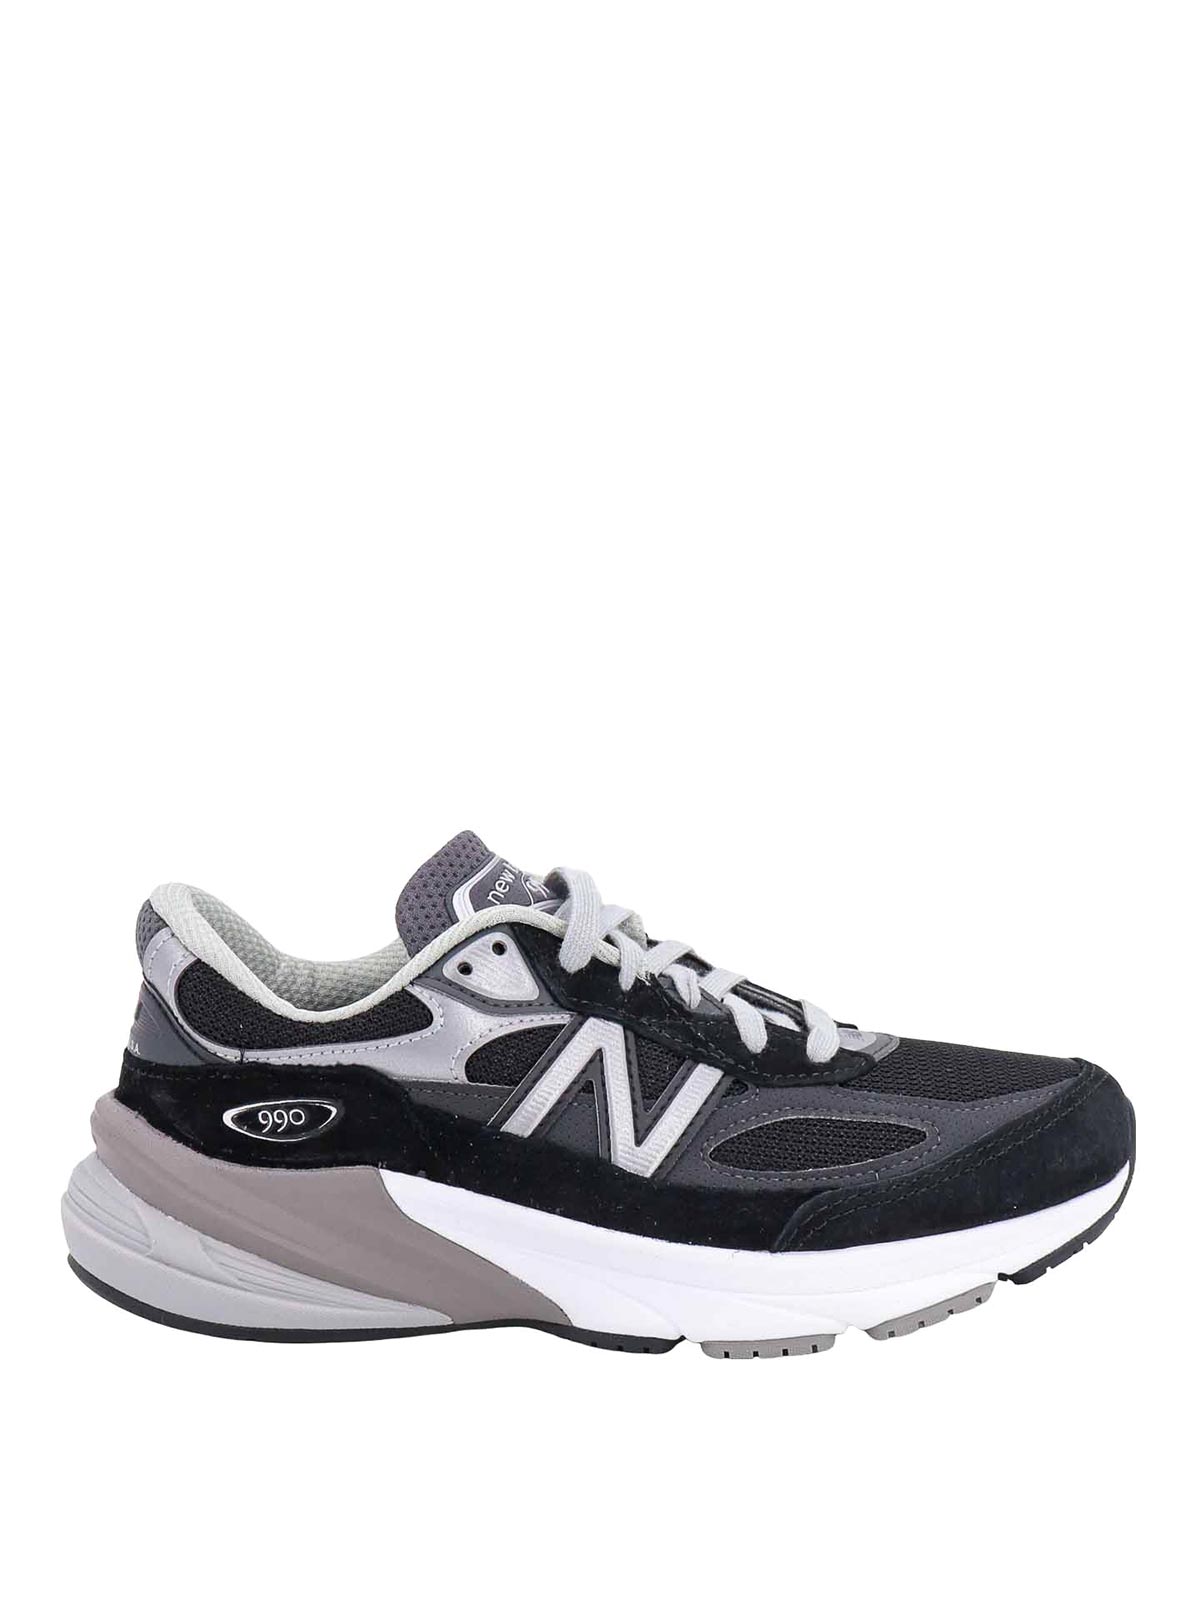 New Balance 990 Nylon Sneakers In Black